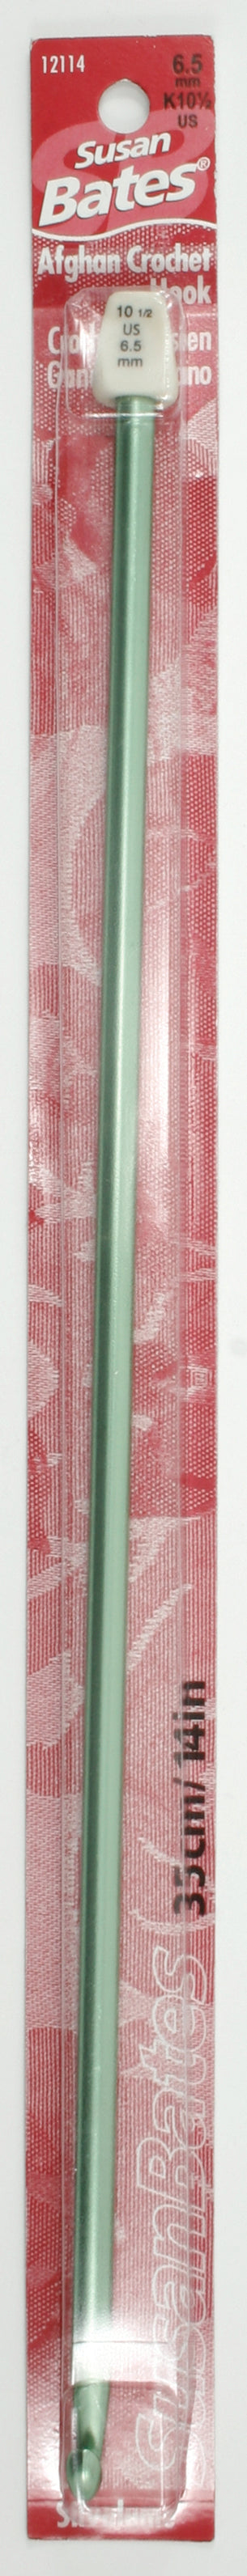 Crochet tunisien SB Silvalume 14 po, 6,5mm, K-10,5